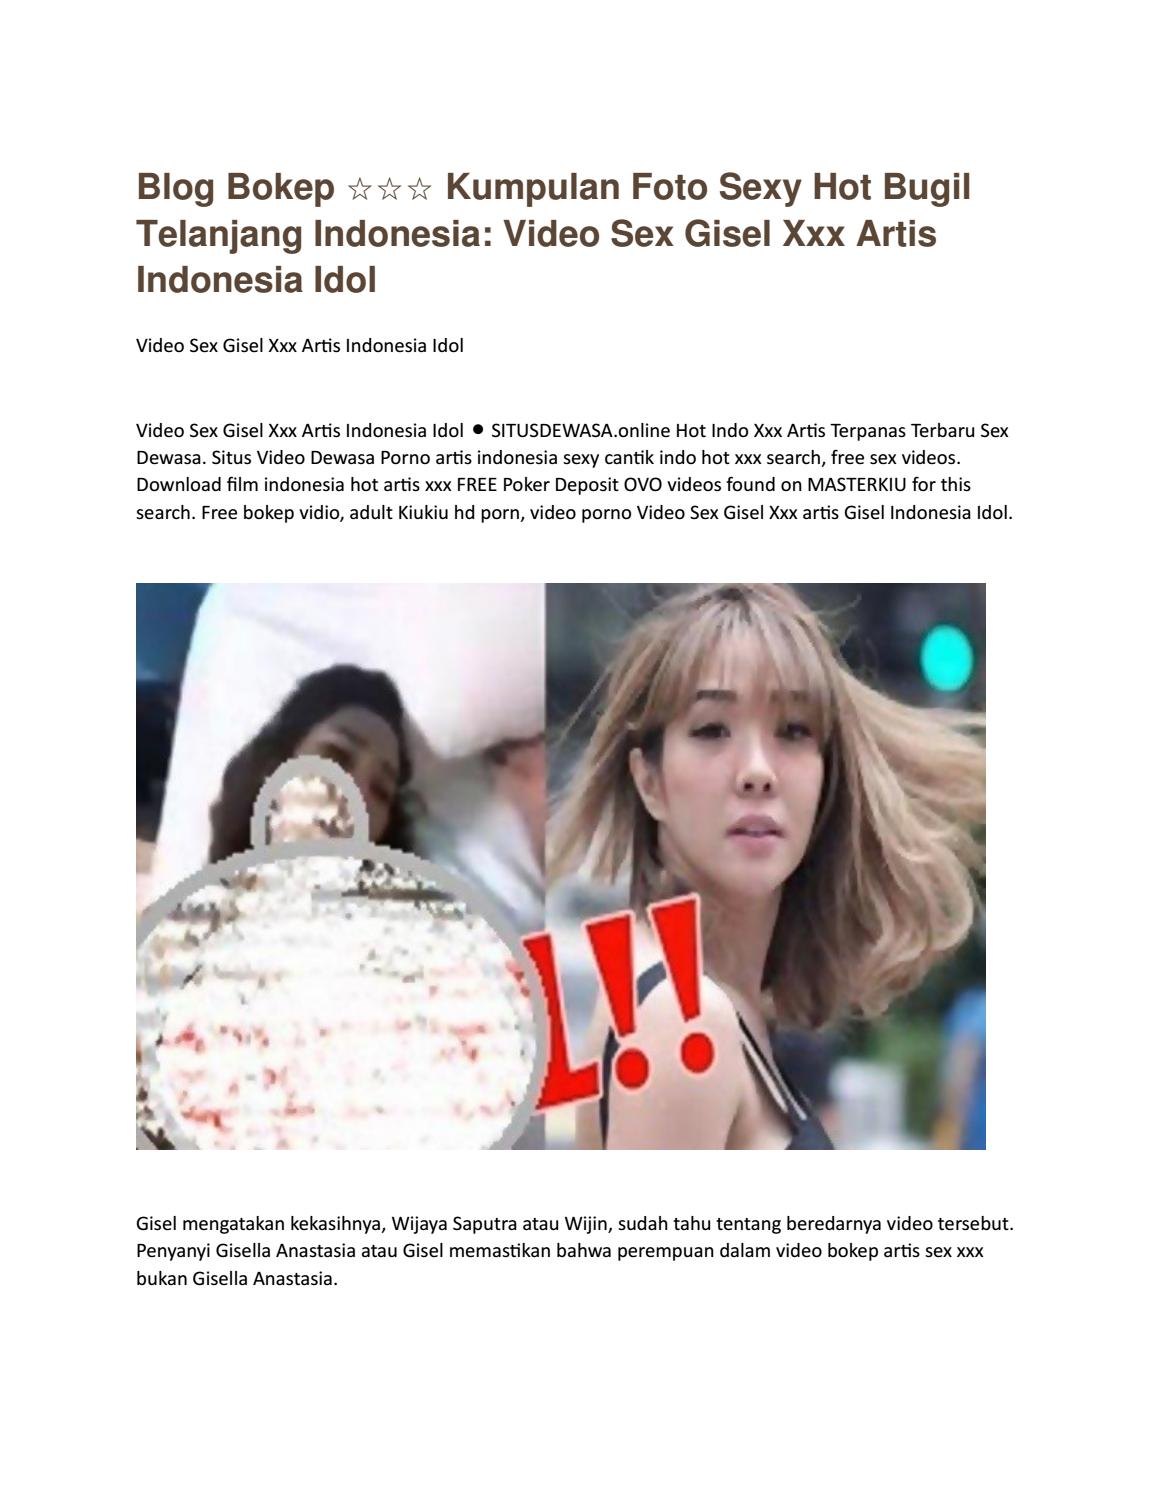 Indonesia artis gisel